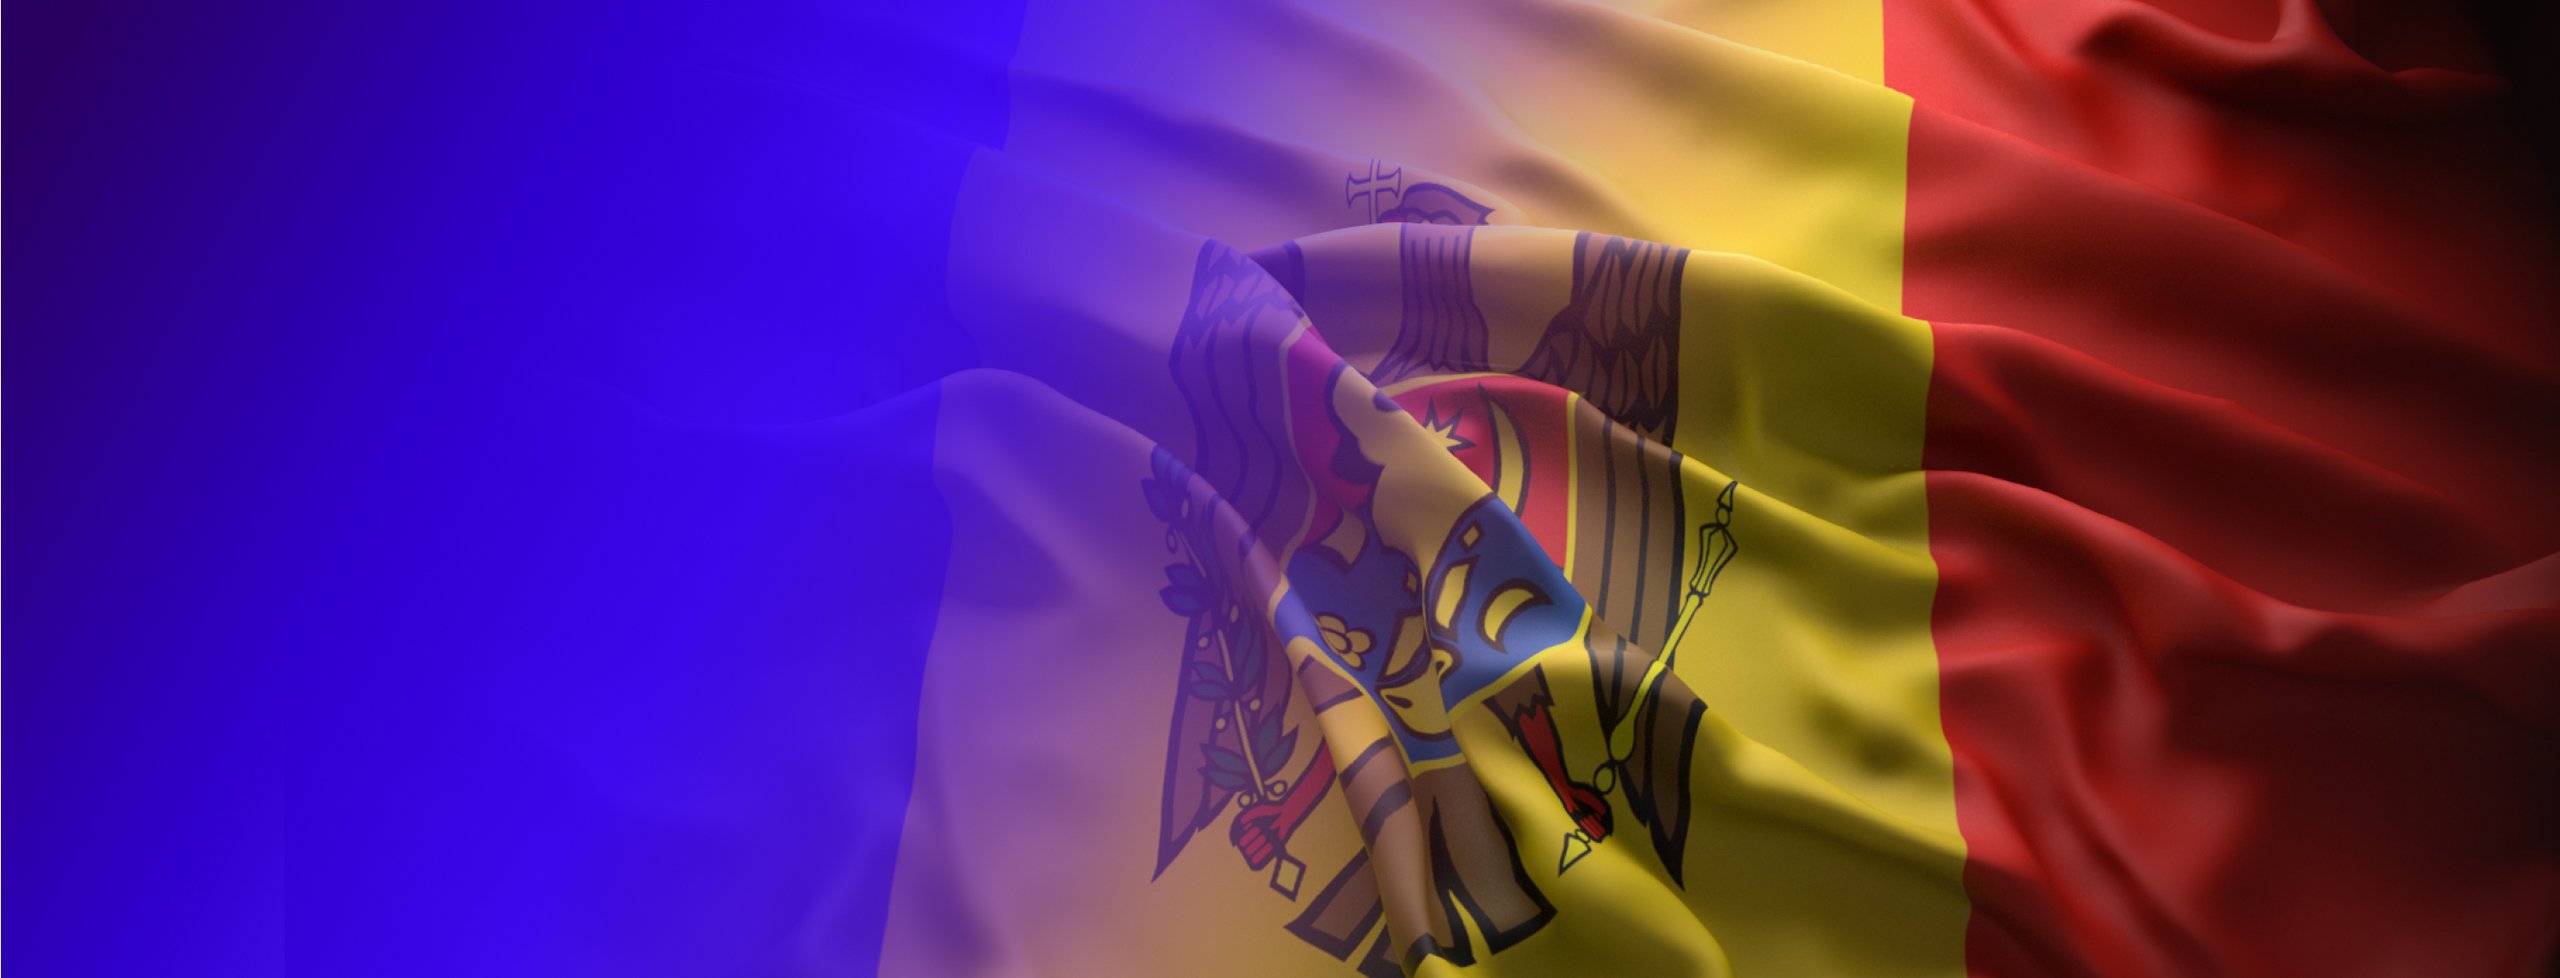 The flag of the Republic of Moldova